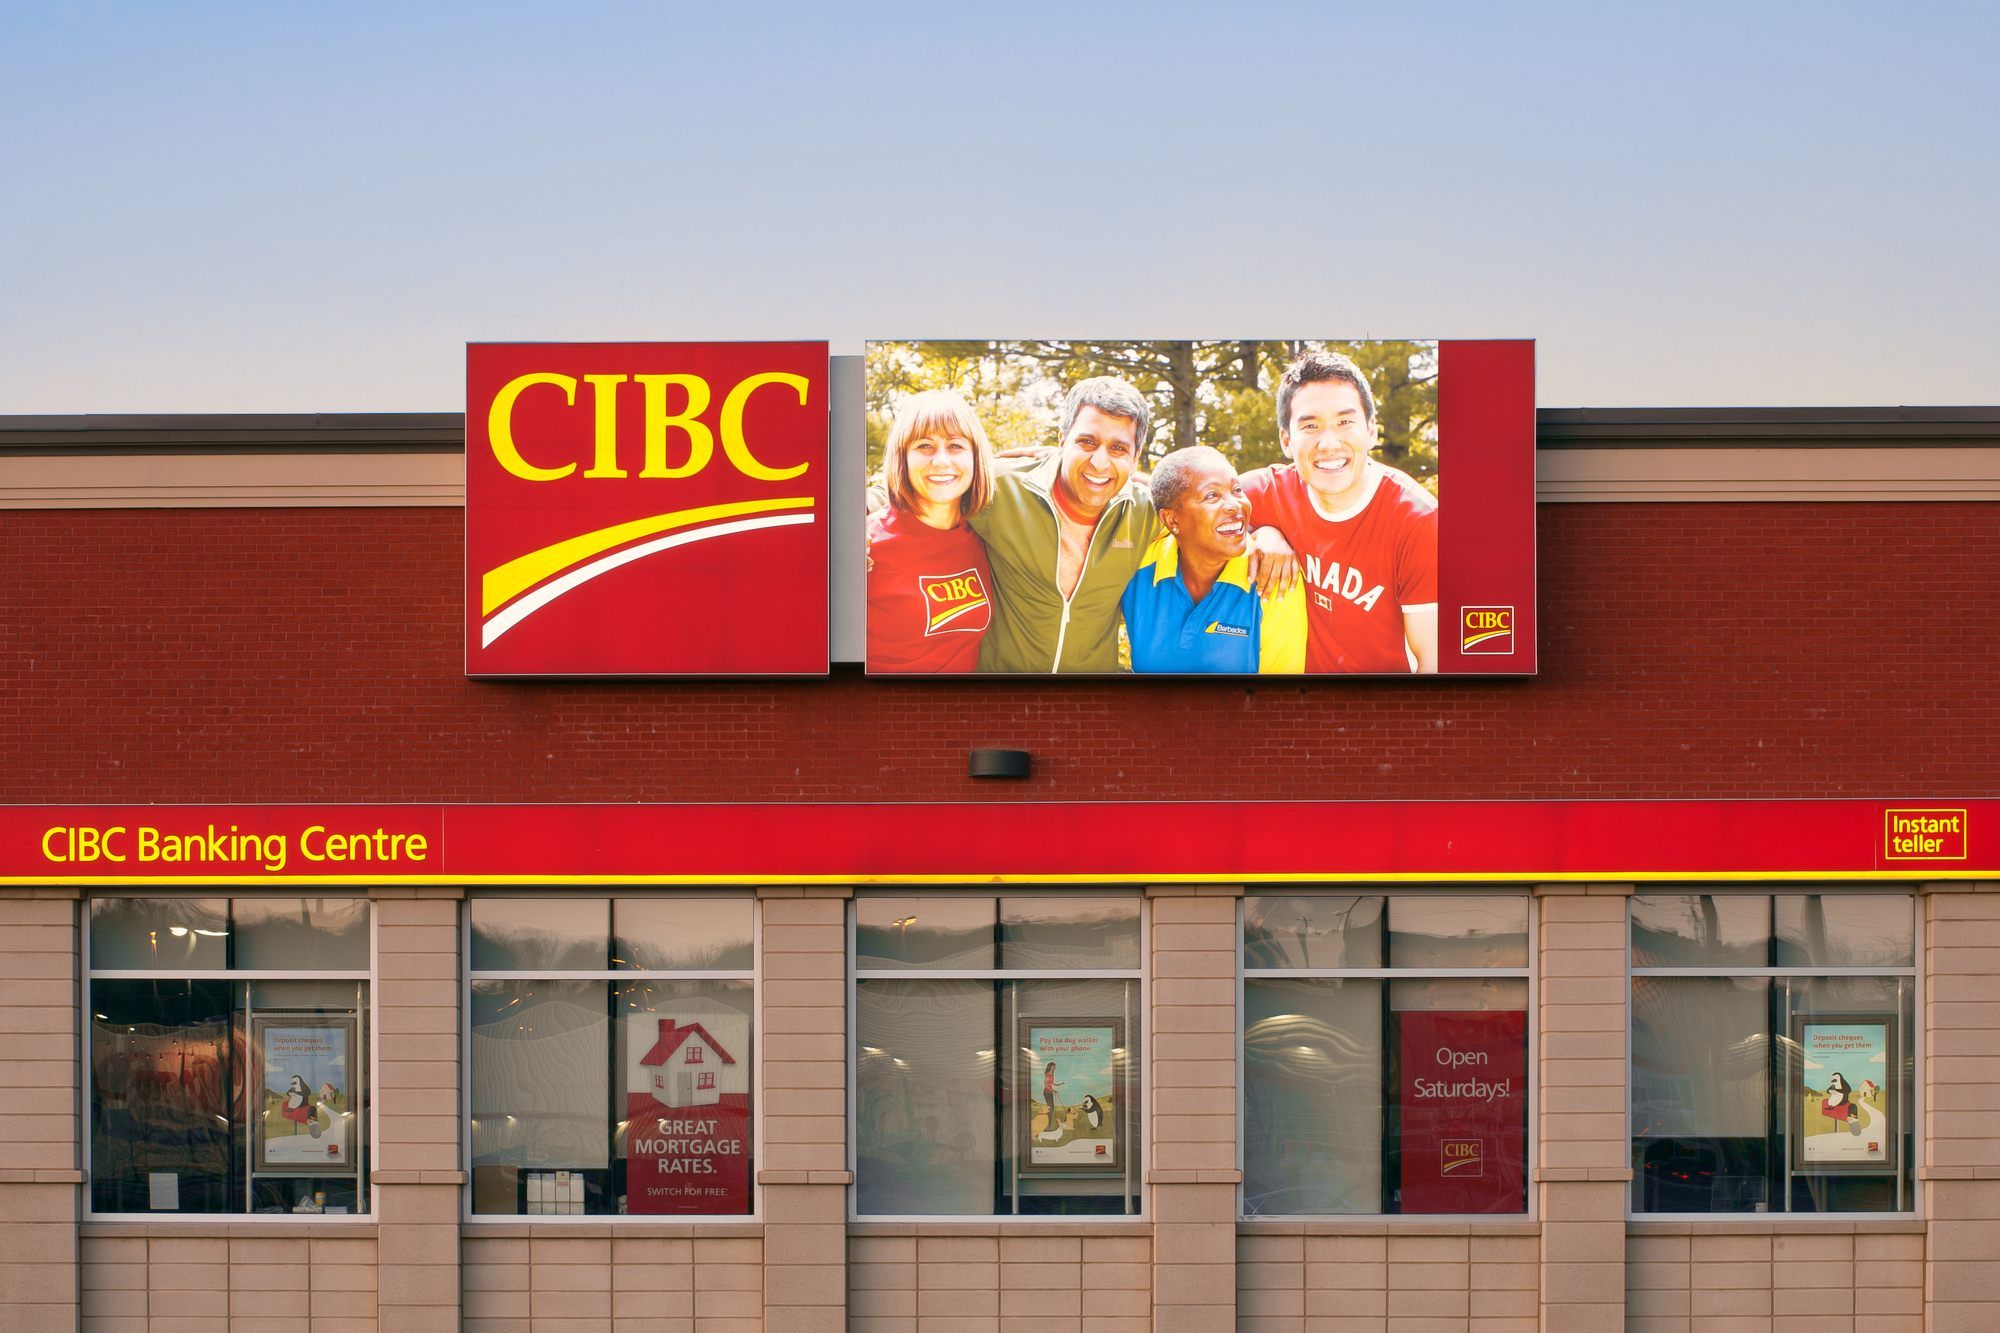 CIBC building regarding the CIBC overtime class action lawsuit